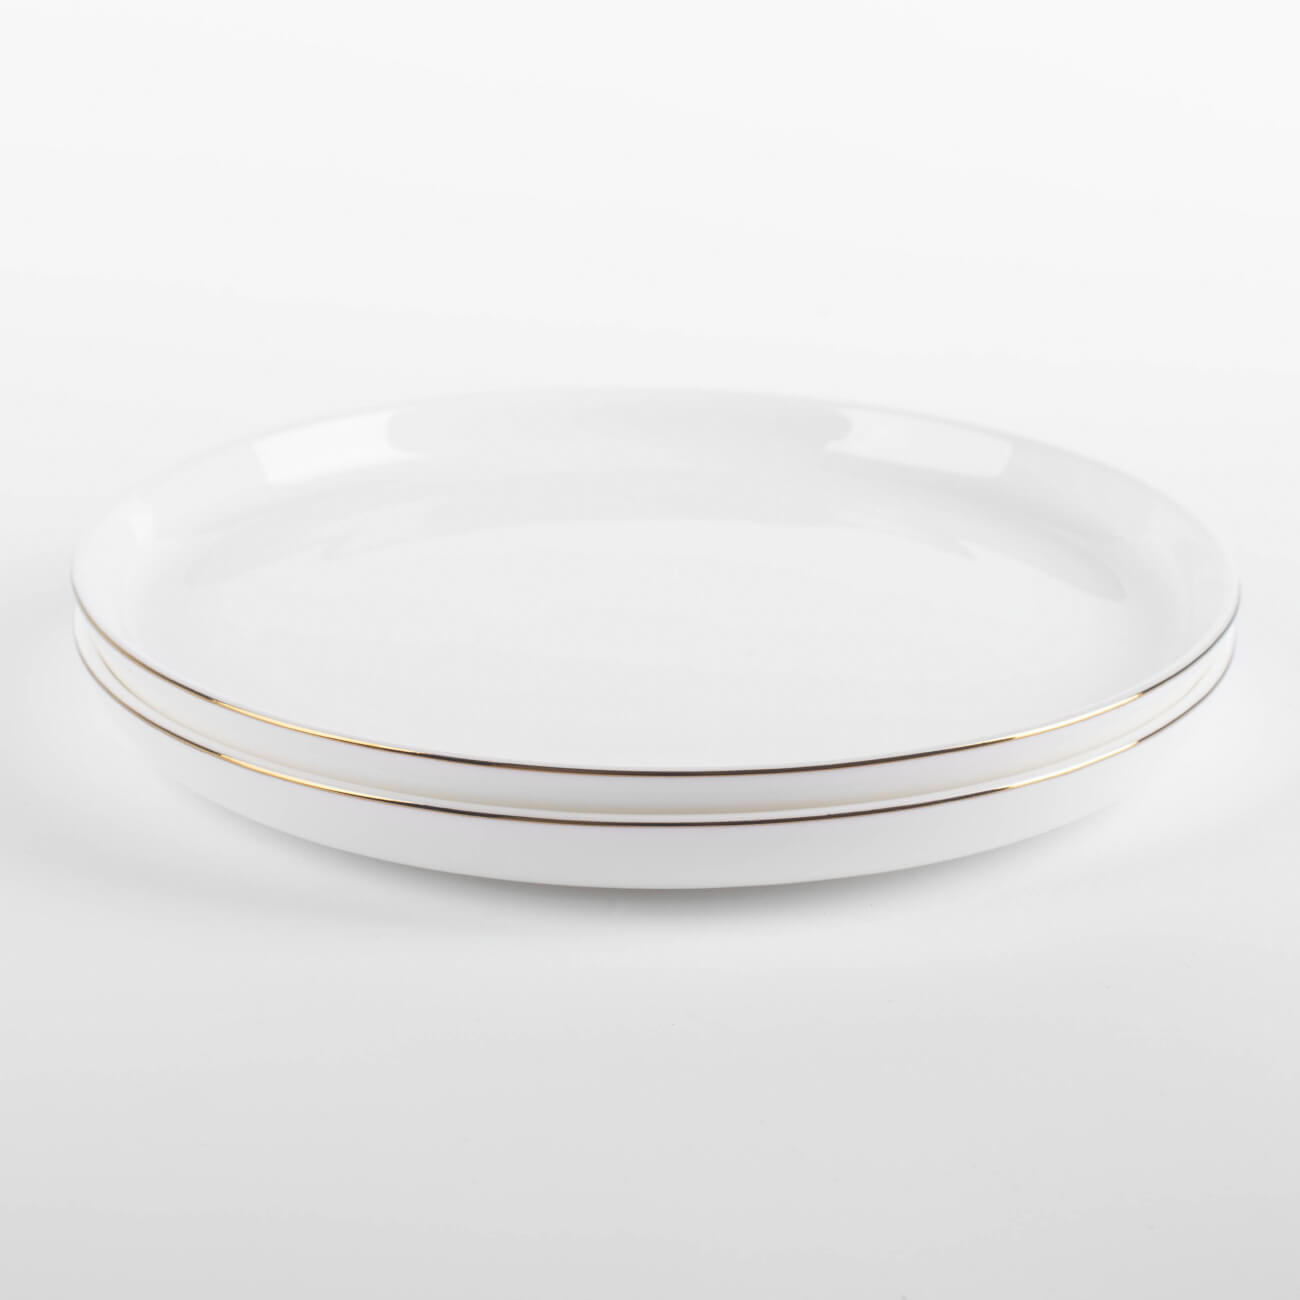 Тарелка десертная, 20 см, 2 шт, фарфор F, белая, Ideal gold тарелка десертная tudor royal sutton 20 см